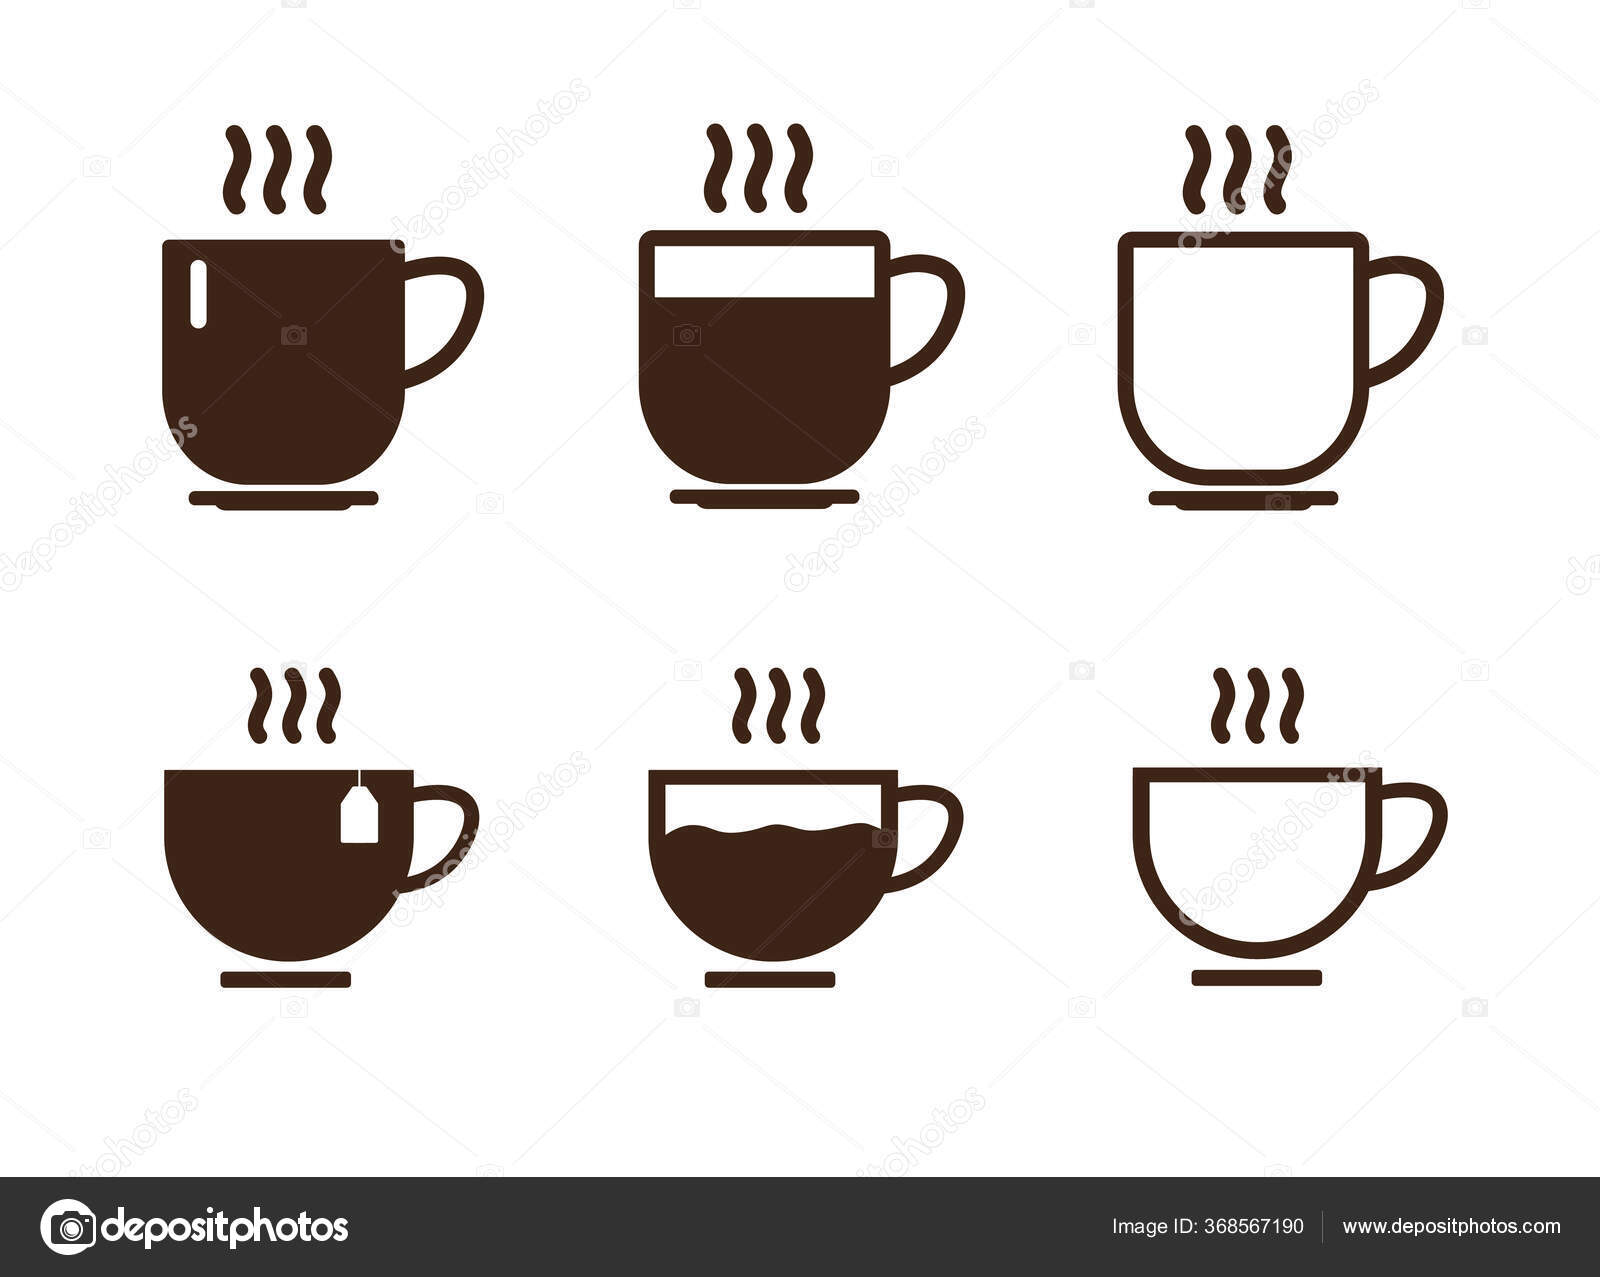 https://st3.depositphotos.com/35030316/36856/v/1600/depositphotos_368567190-stock-illustration-coffee-cup-icon-vector-illustration.jpg